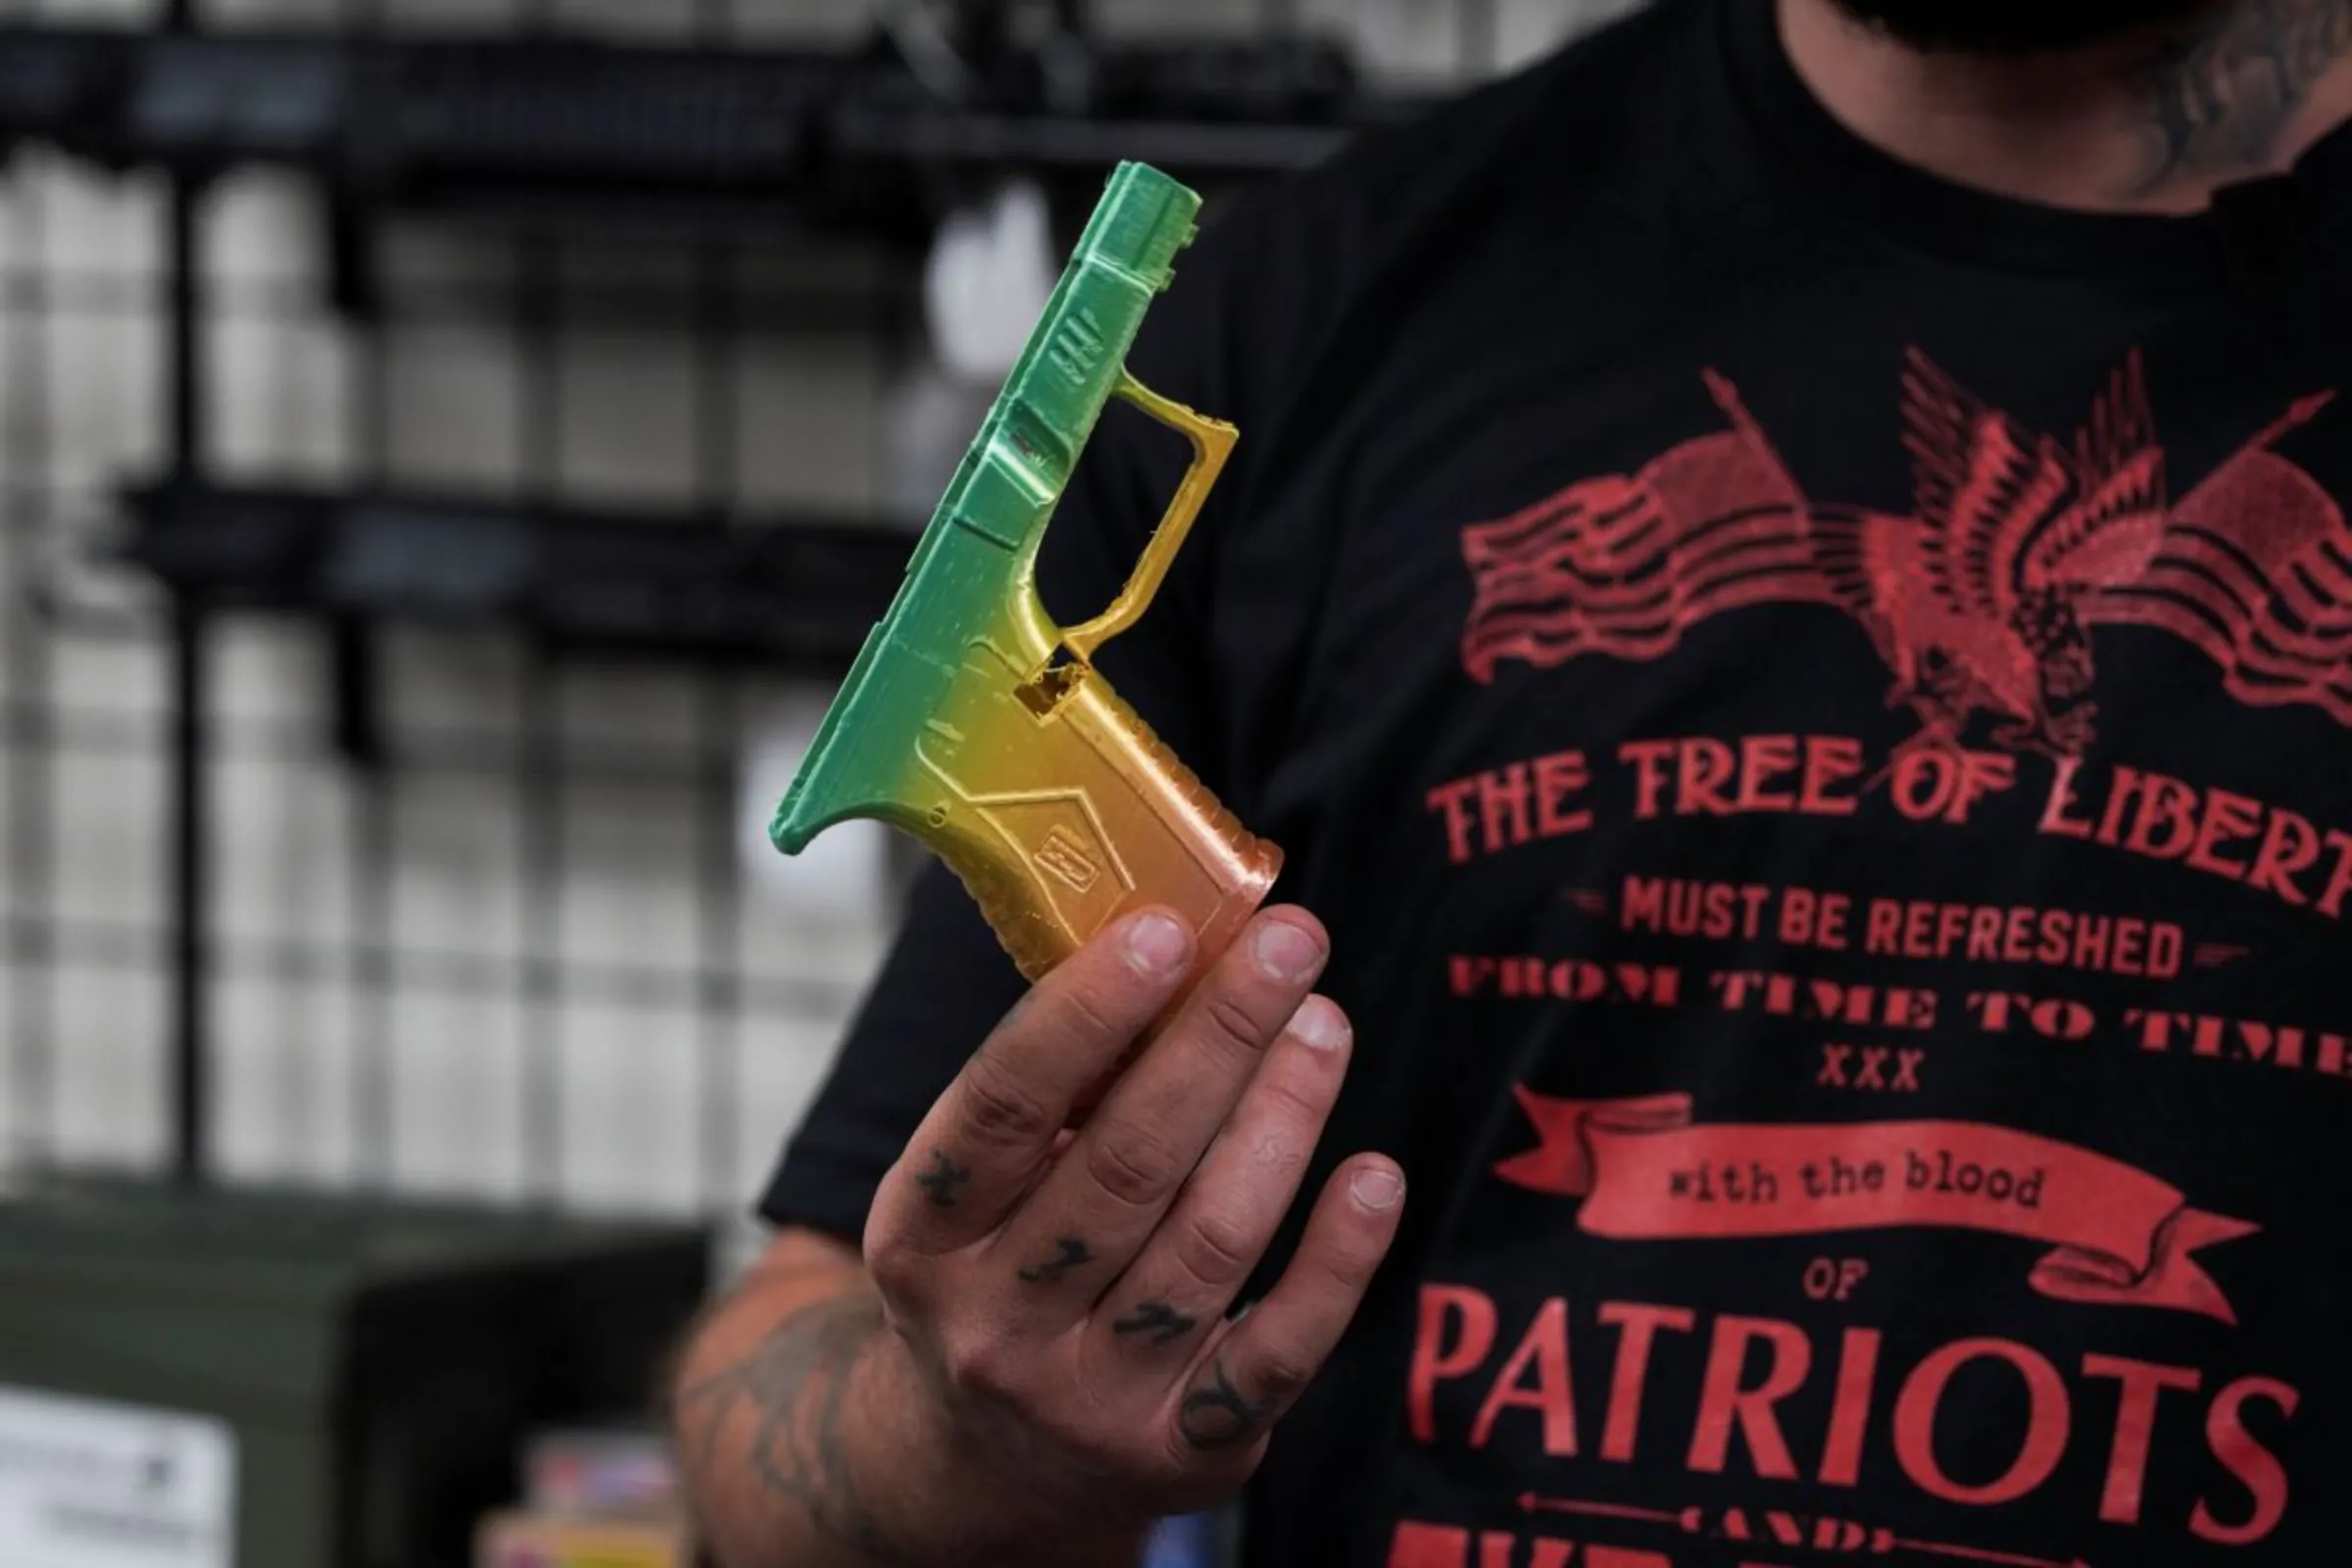 A man shows a custom 3D-printed lower receiver for a Glock pistol inside Firearms Unknown, a gun store in Oceanside, California, U.S., April 12, 2021. REUTERS/Bing Guan